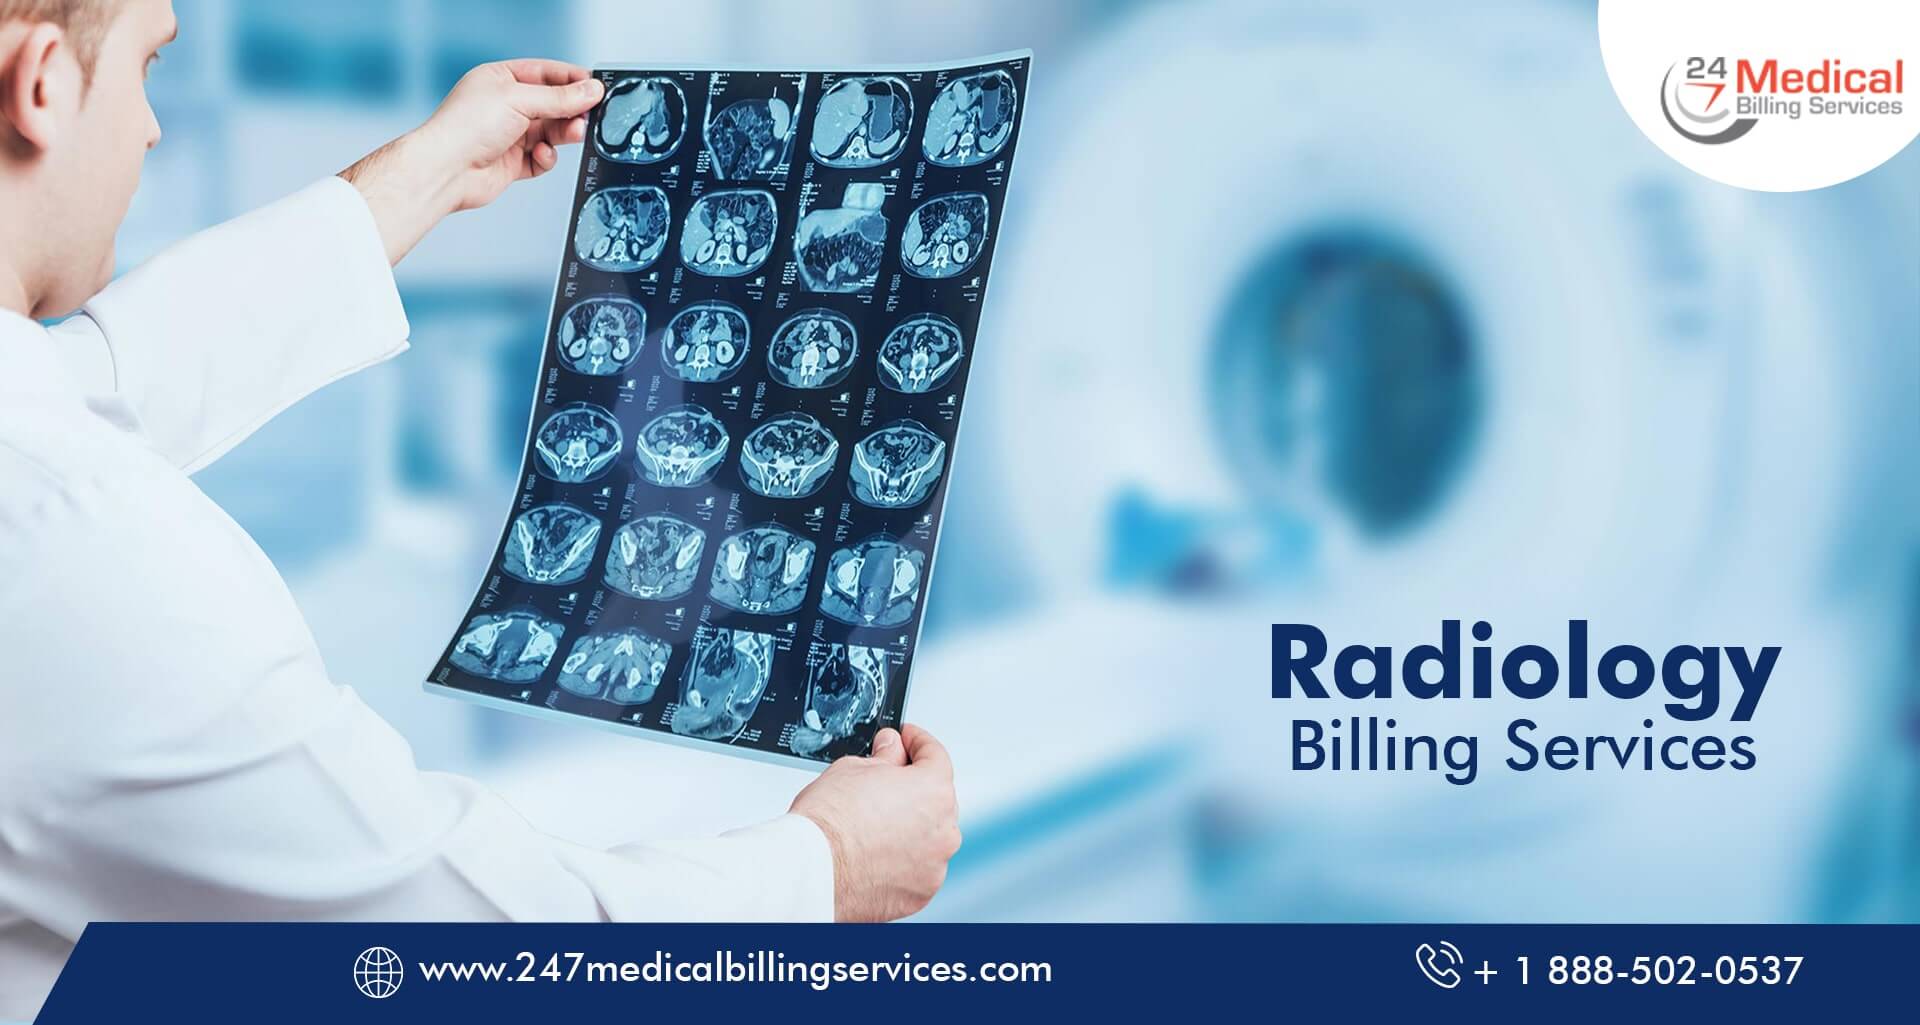  Radiology Billing Services in Arlington, Texas (TX)